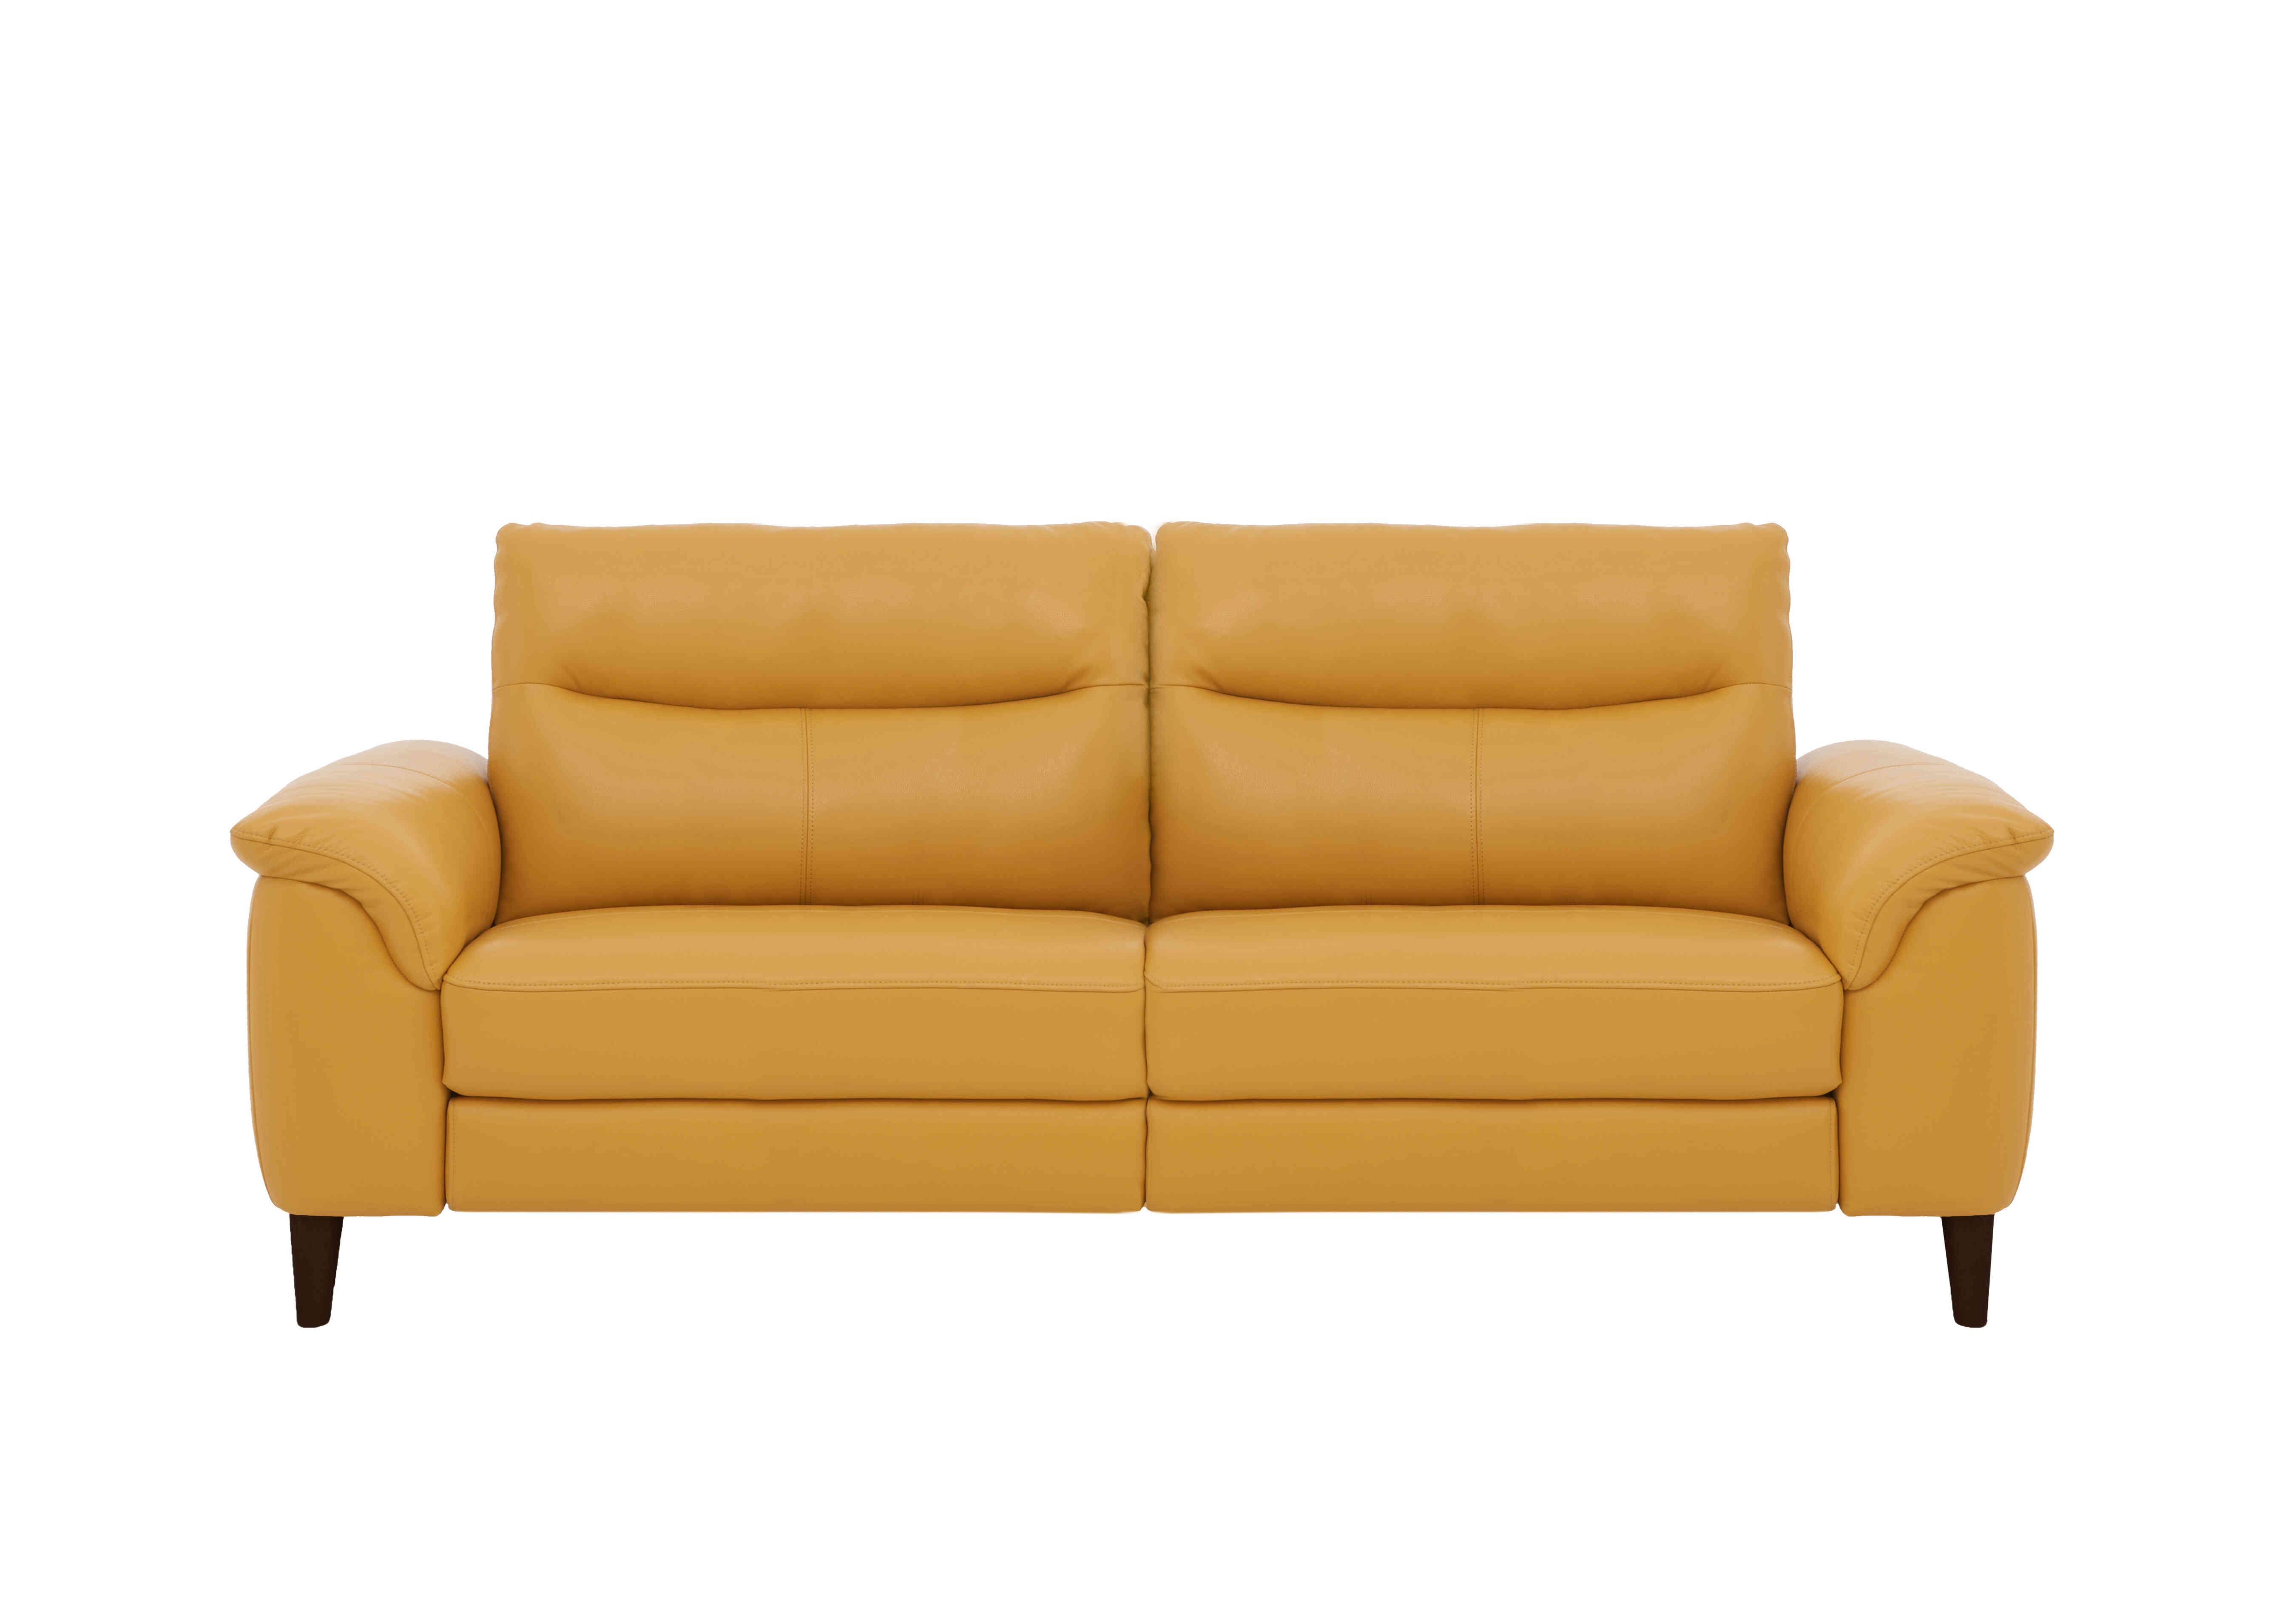 Morgan 3 Seater Leather Sofa in Florida Sunburst Cat-35/14 on Furniture Village